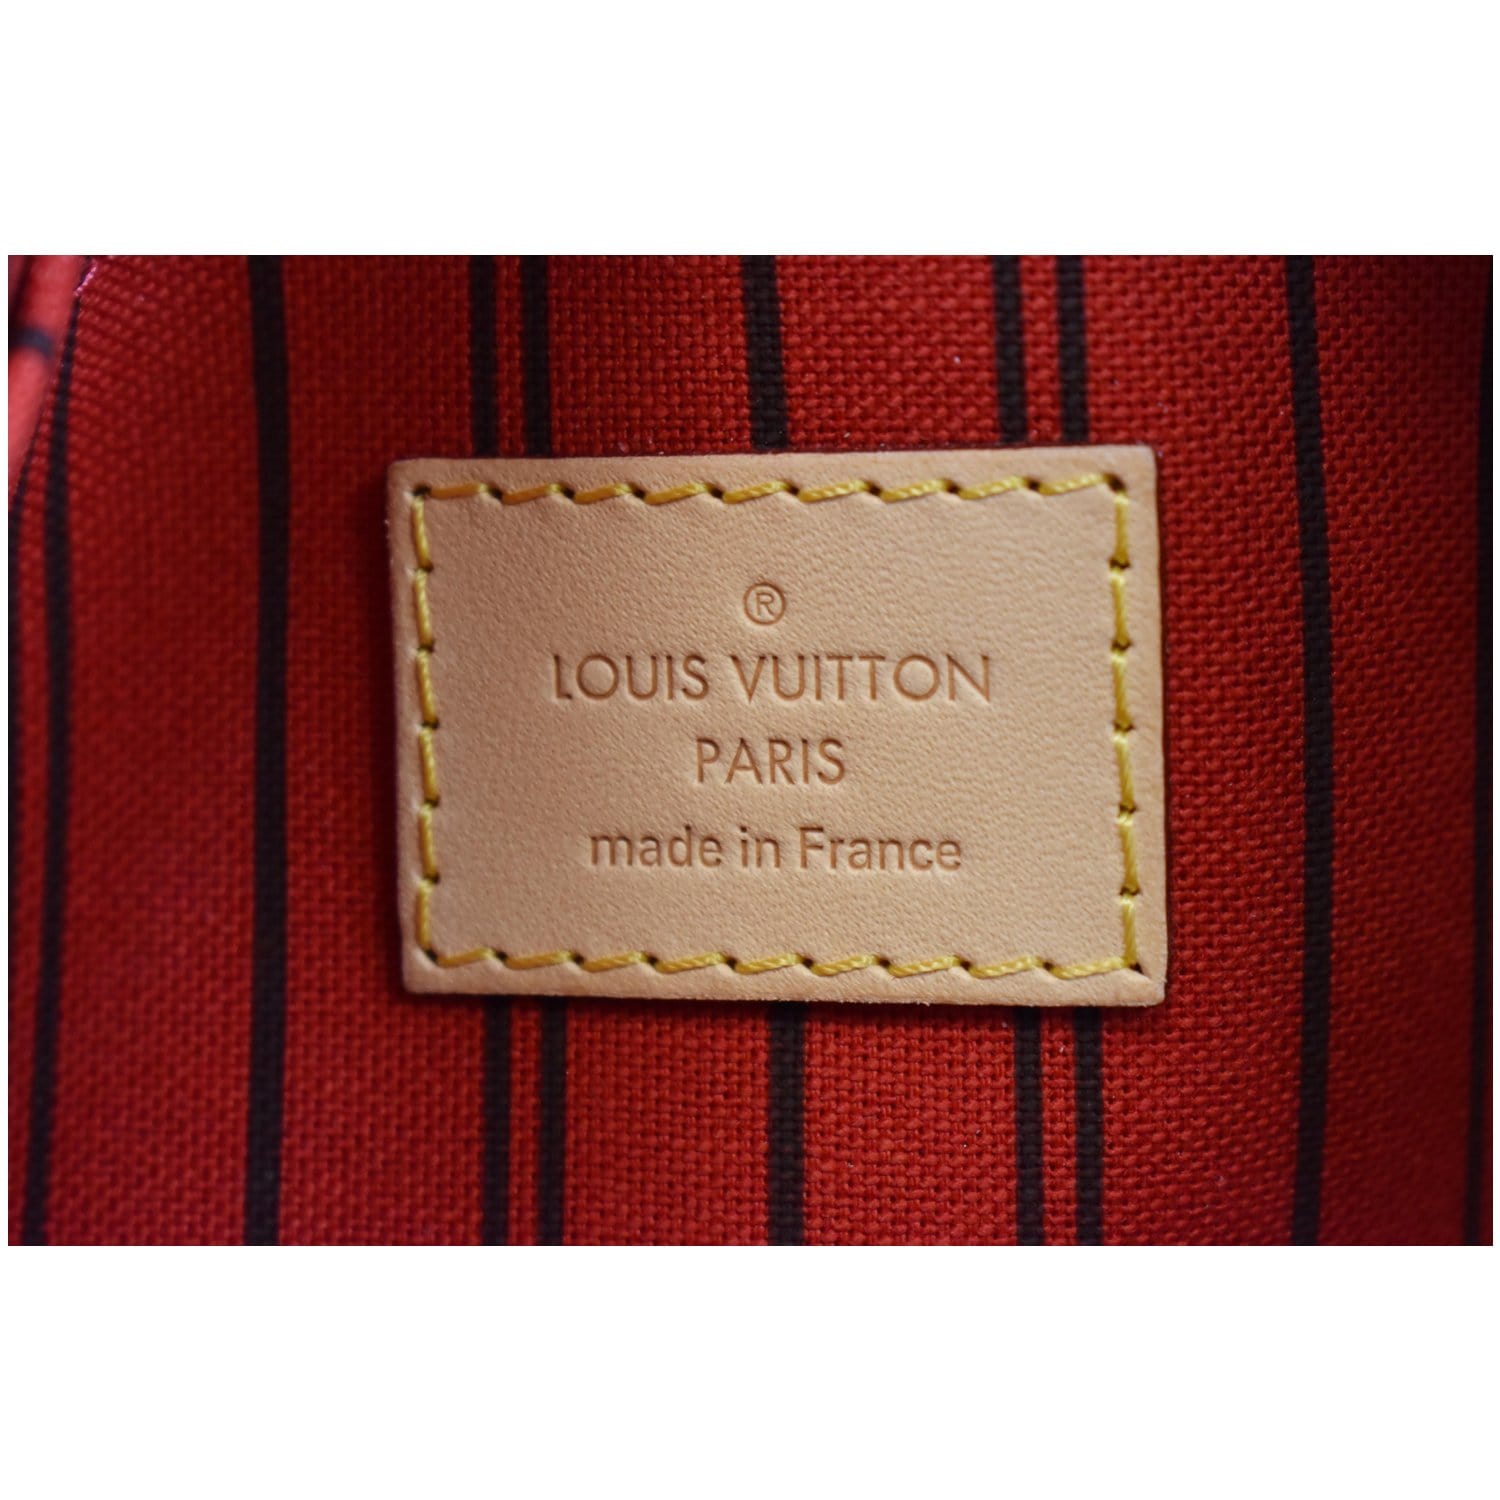 Louis Vuitton, Neverfull Damier Ebene Canvas MM Bag, bro…